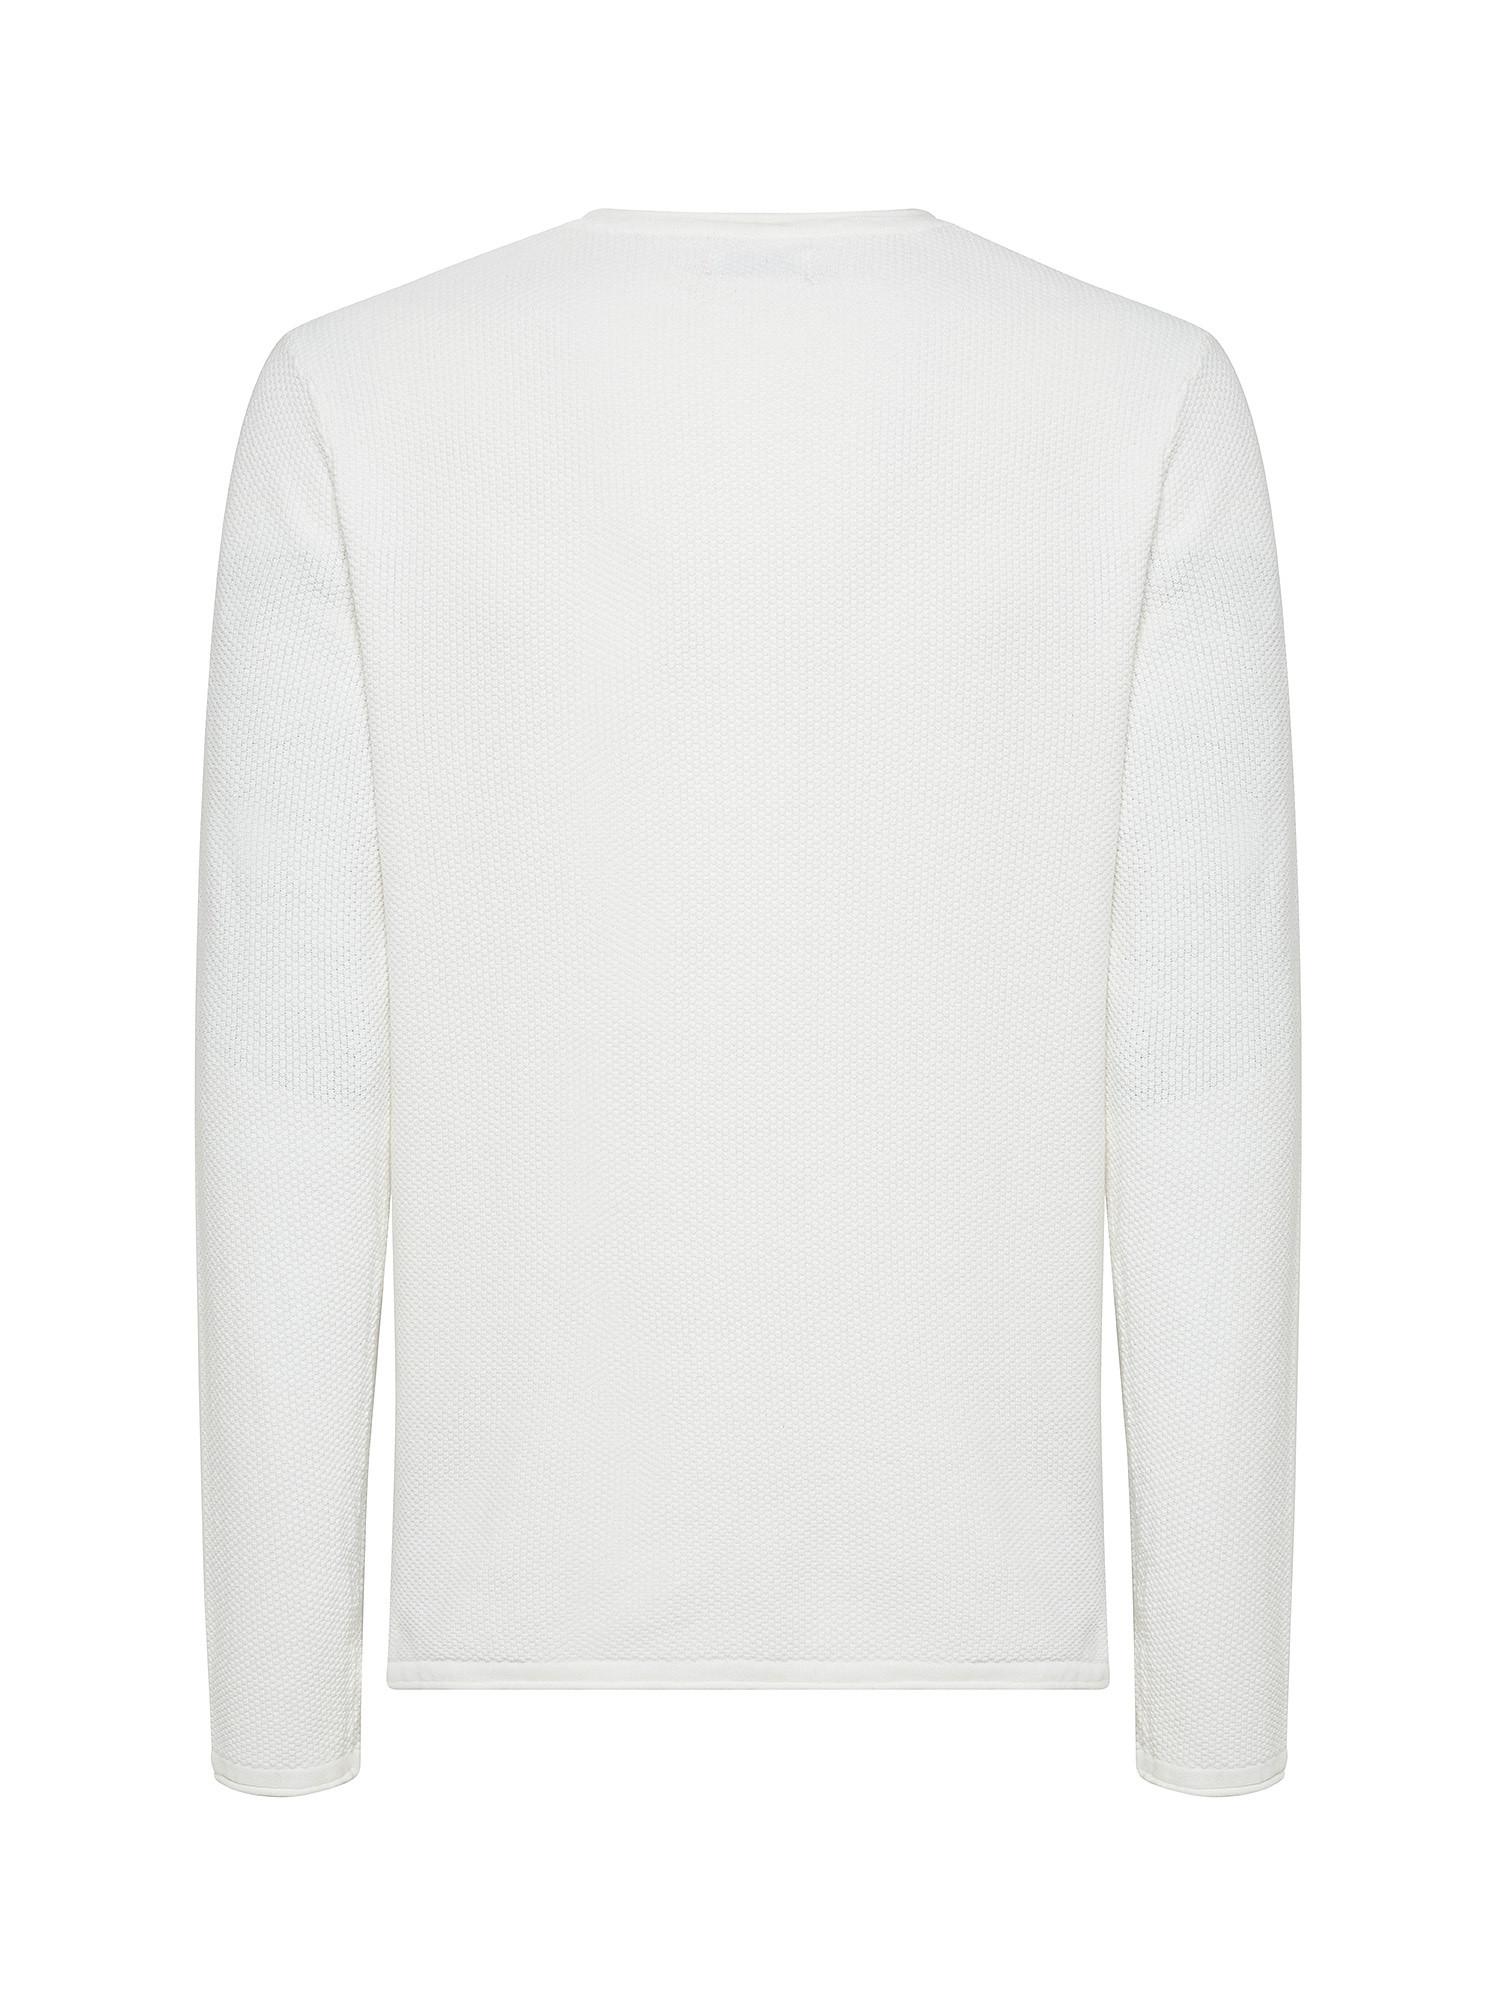 Jack & Jones - Cotton pullover, White, large image number 1